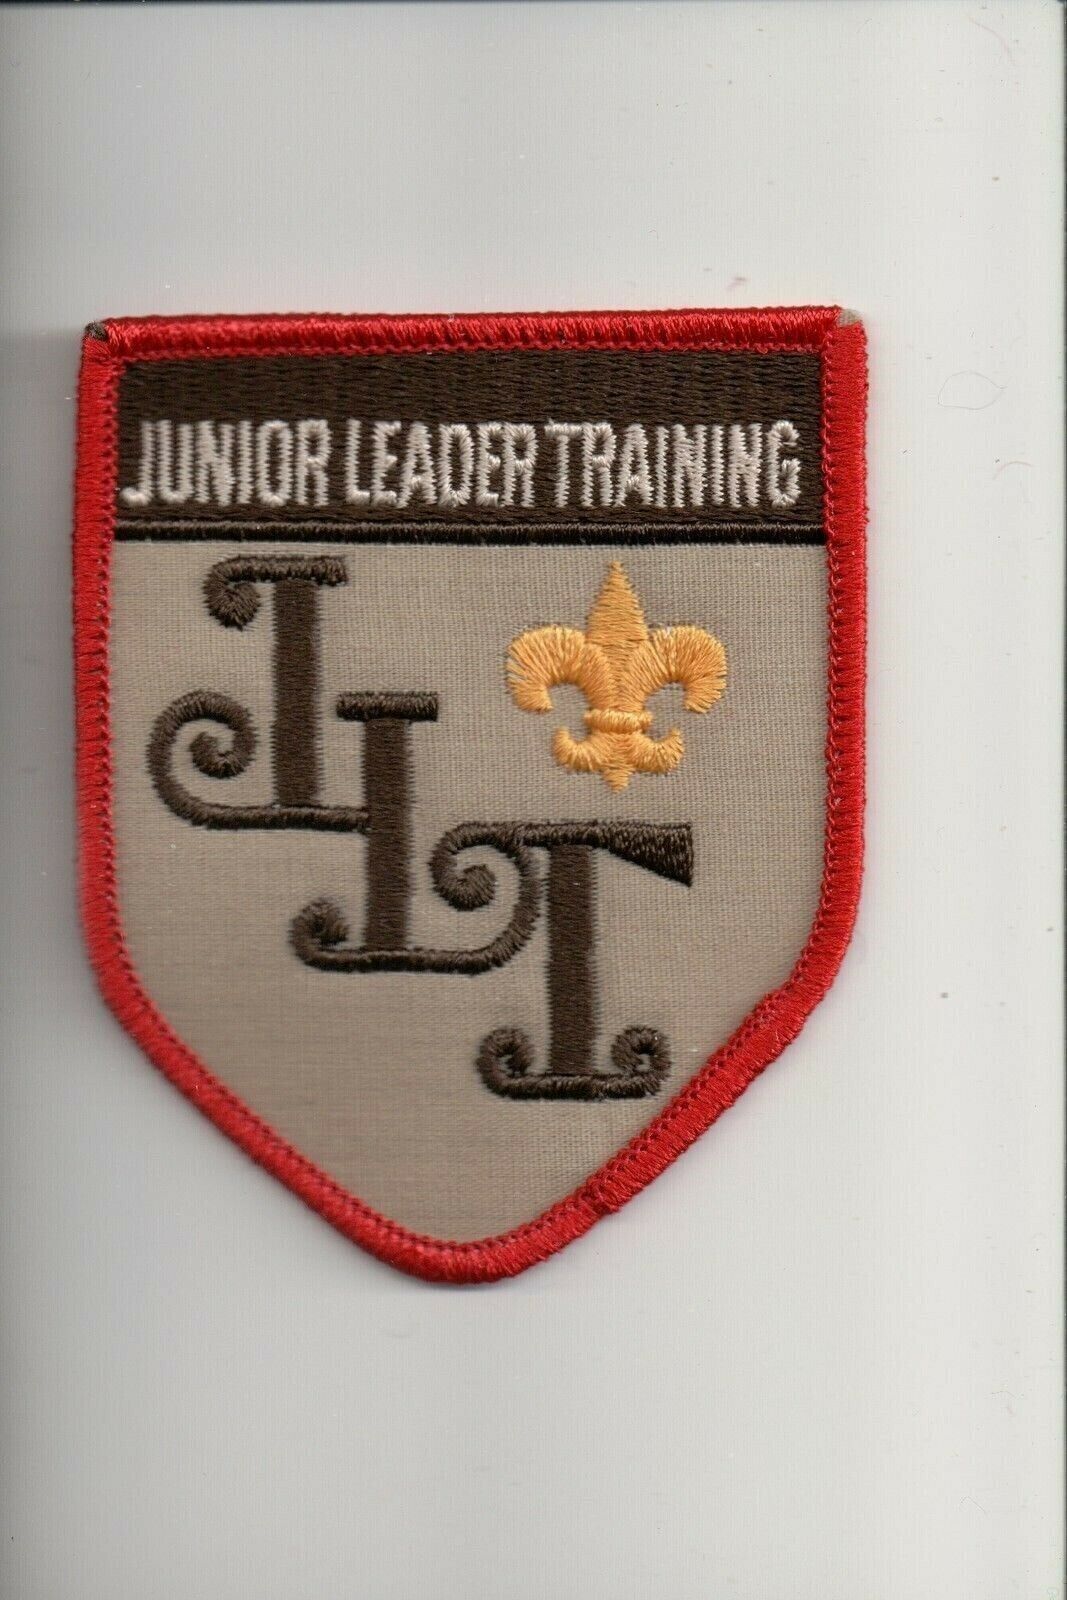 Junior Leader Training JLT patch